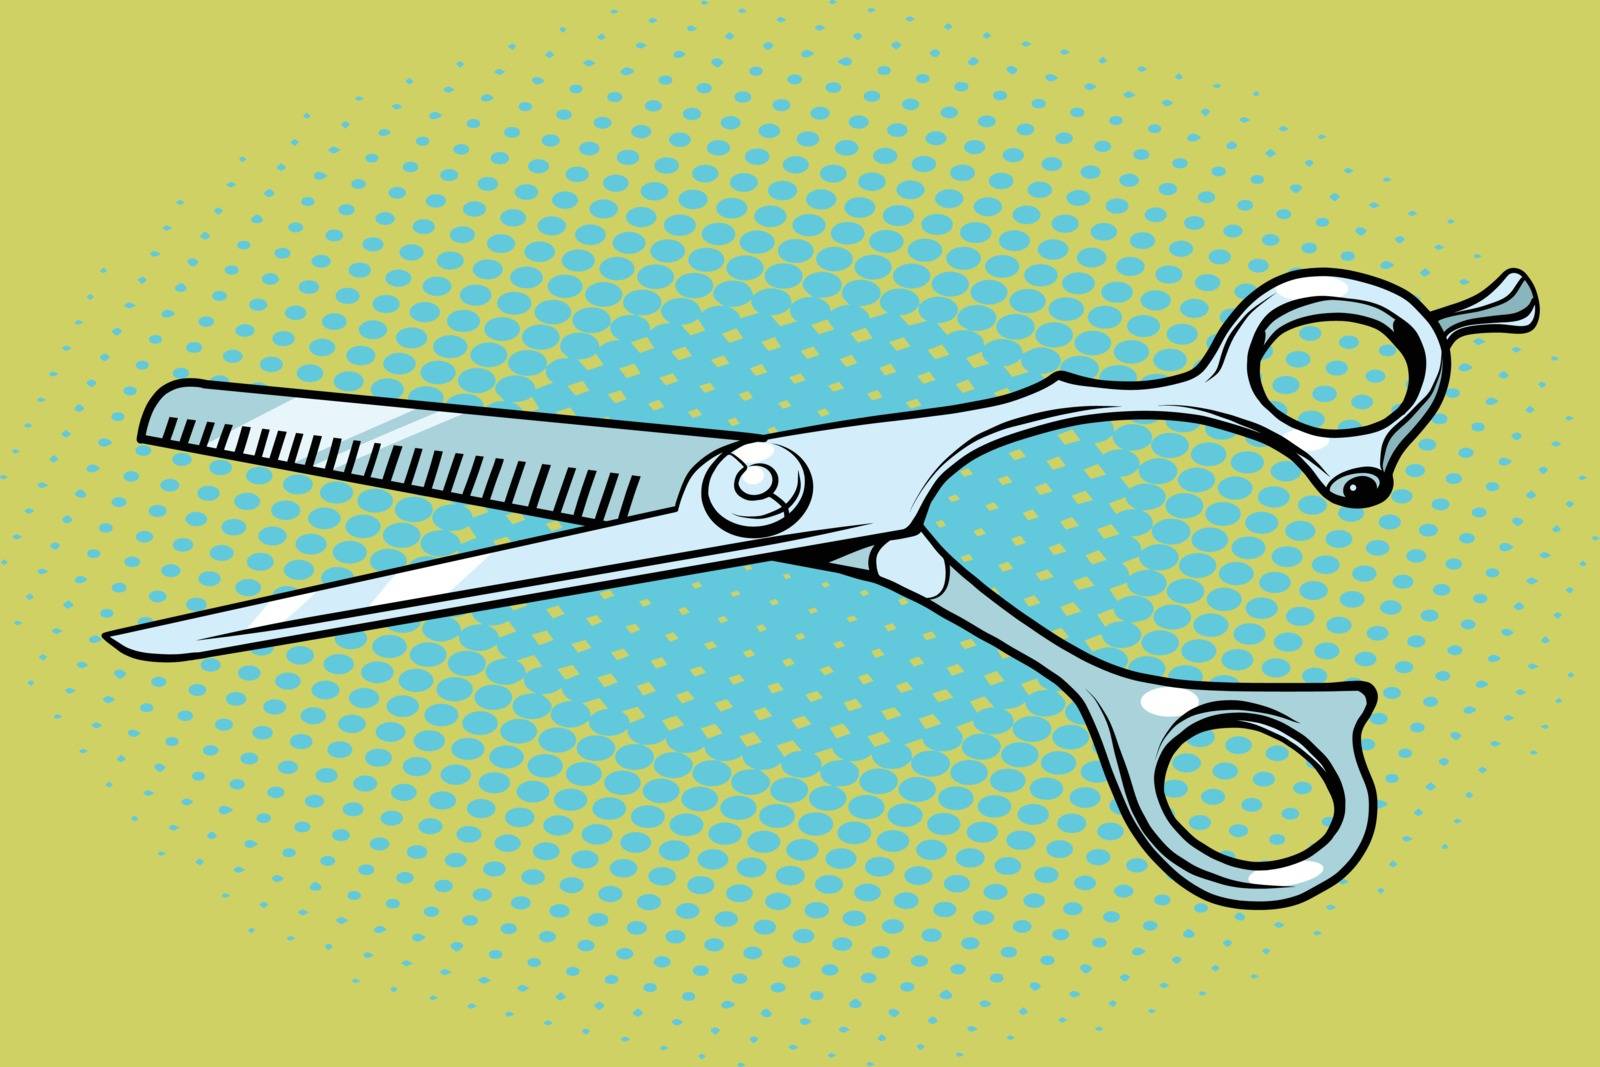 Metal Barber scissors by studiostoks